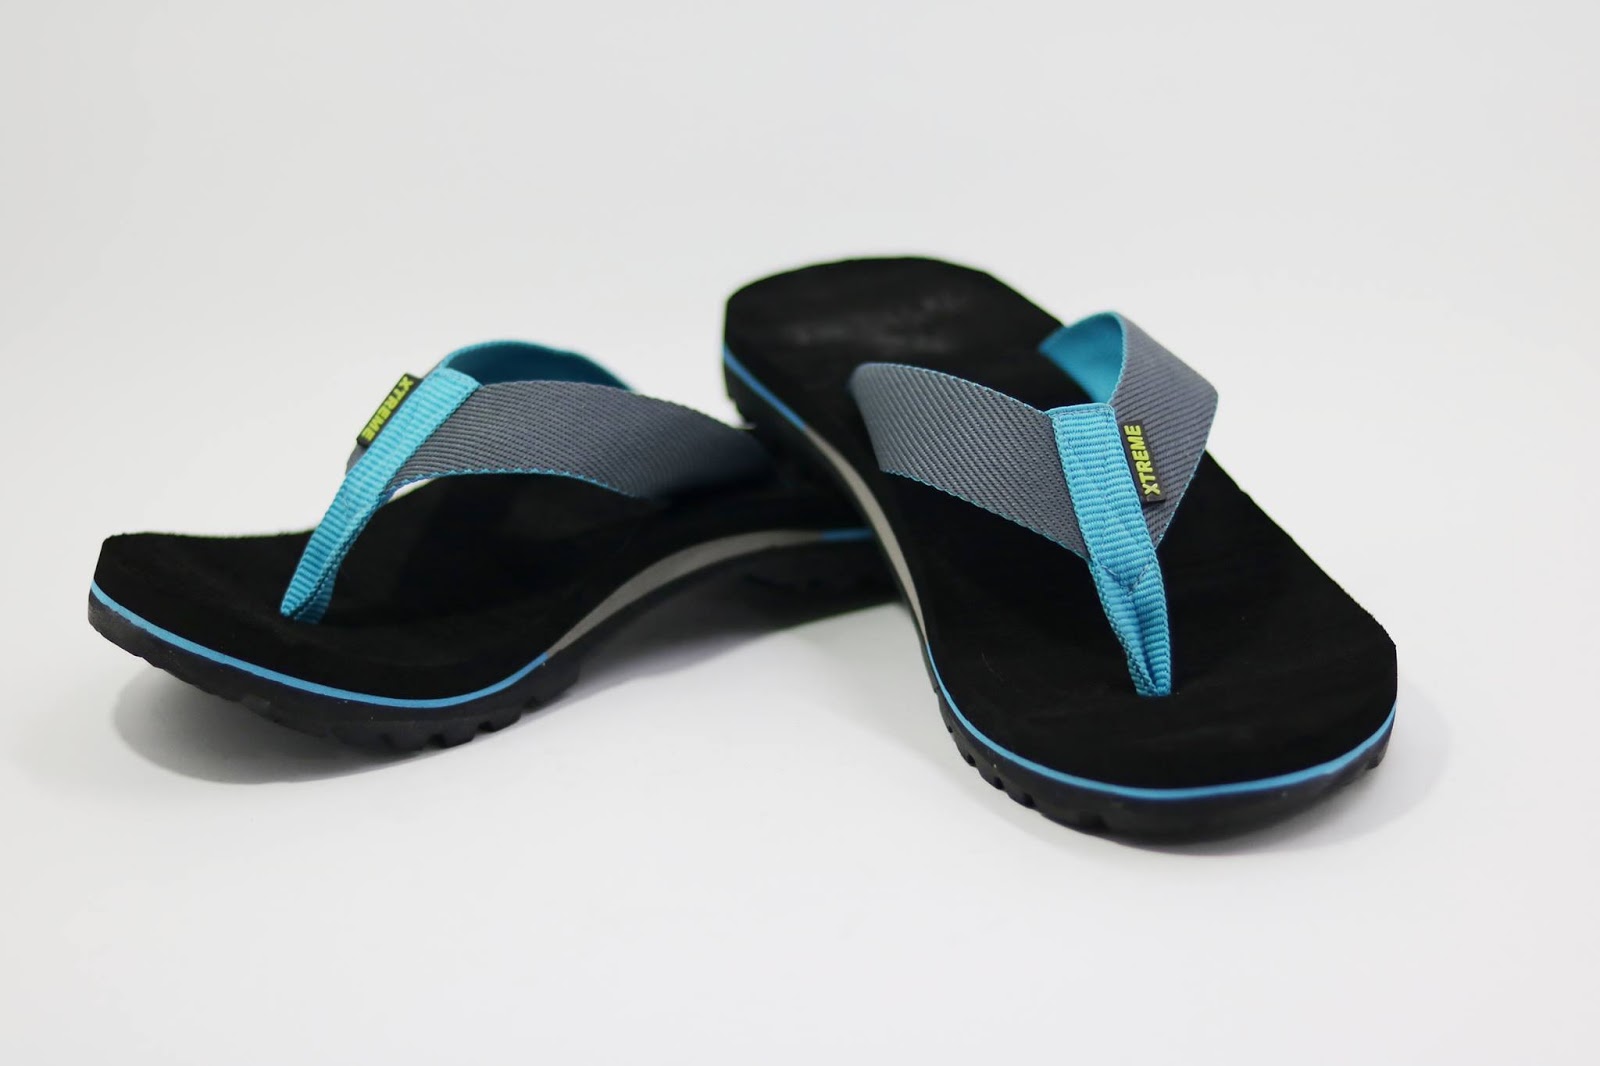  Sandal  Xtreme Sandal  Pria  Terbaru  Sandal  Lucu Sancu 